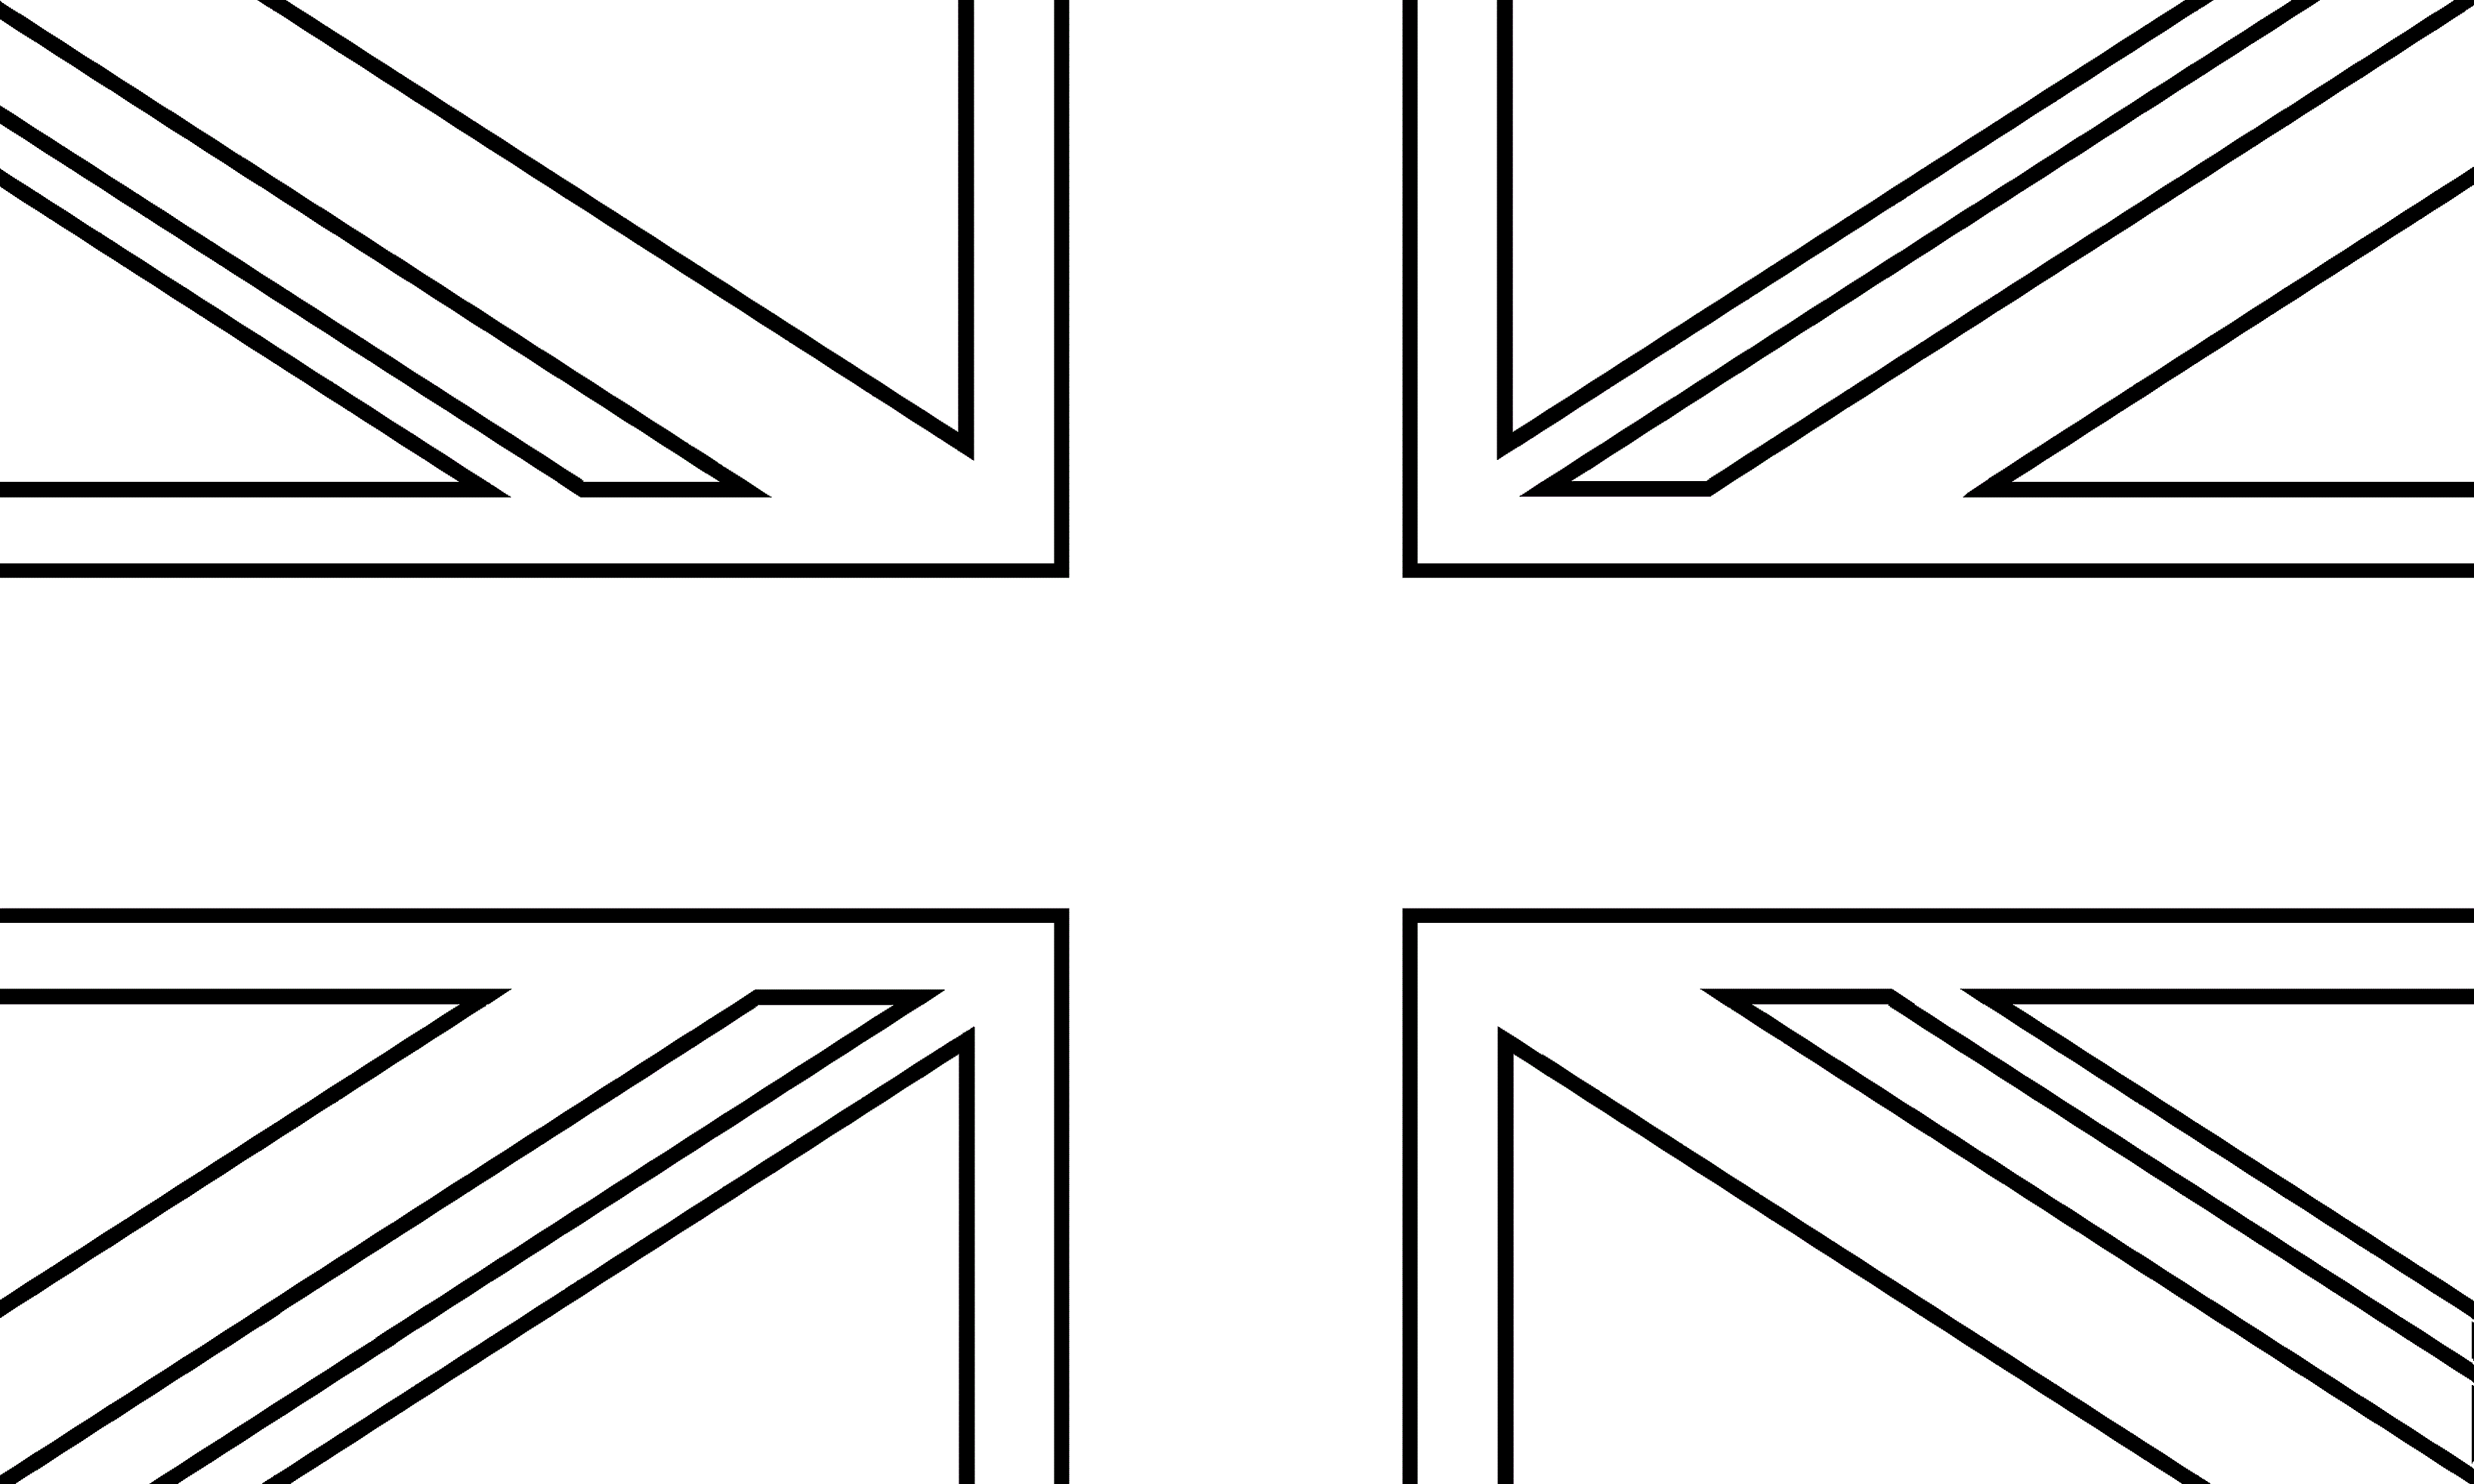 union-jack-flag-to-colour-image-to-u